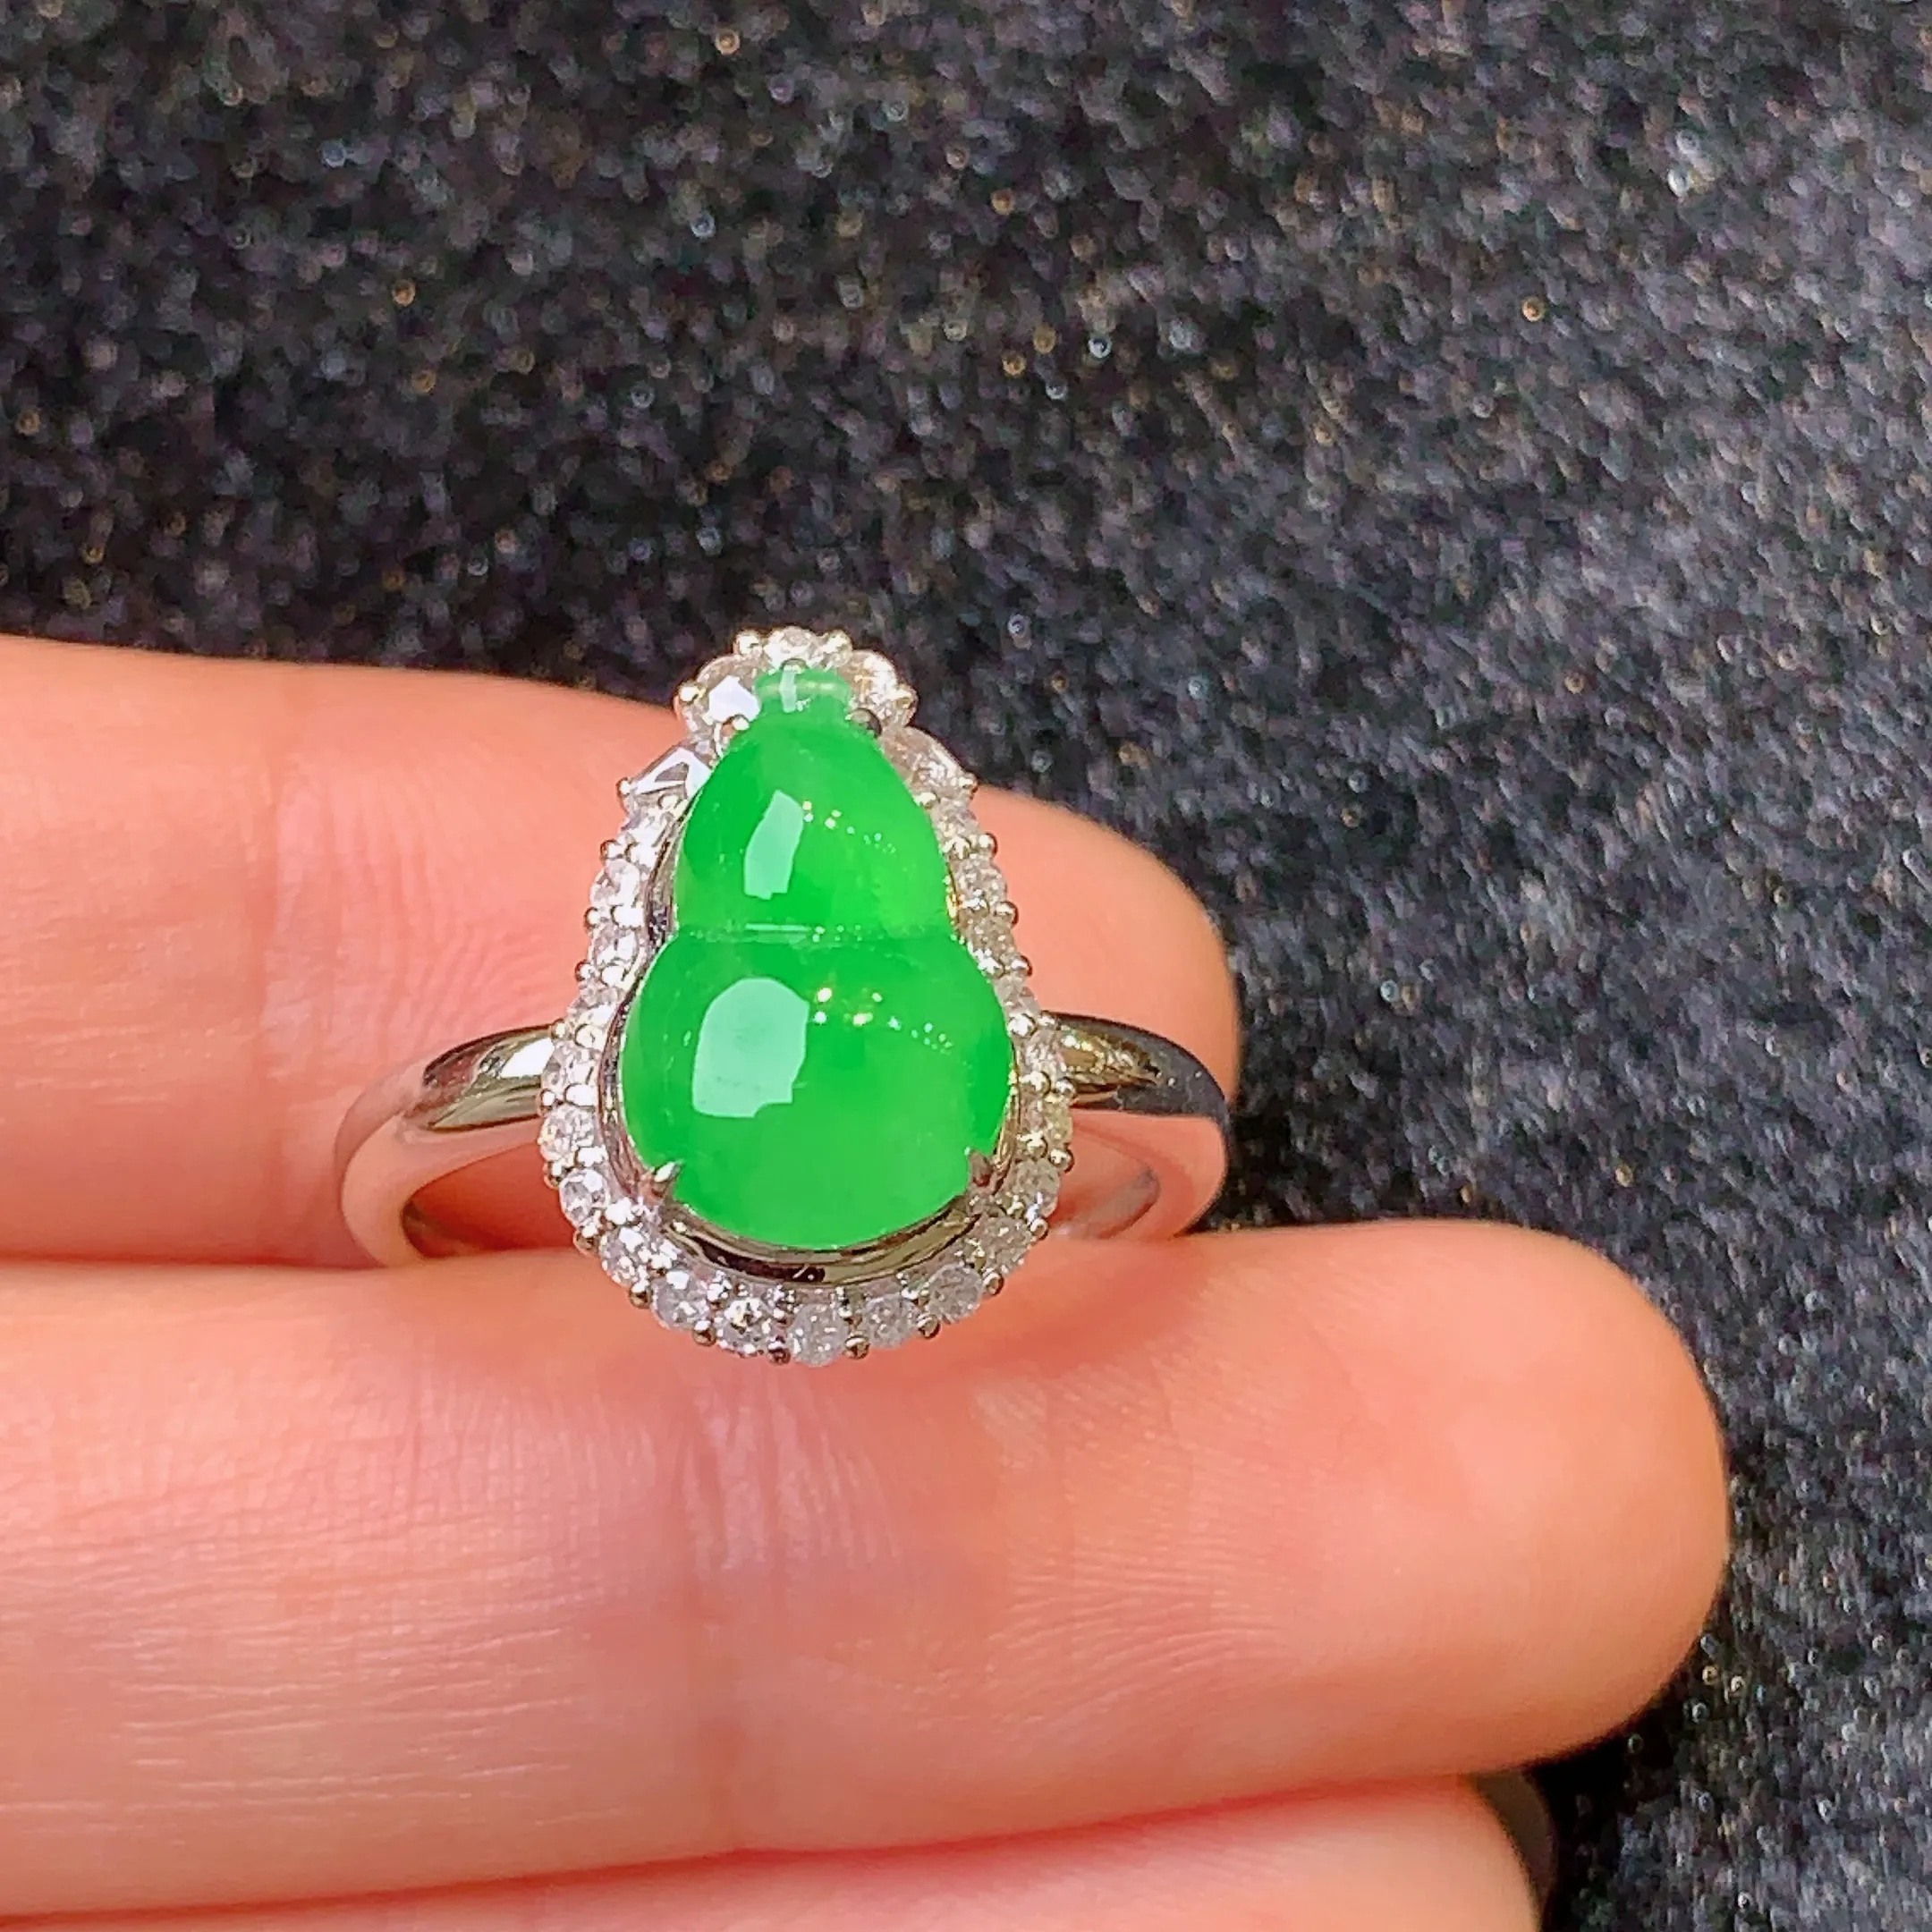 18k金钻镶嵌满绿葫芦戒指 玉质细腻 款式新颖时尚高贵优雅 圈口14整体尺寸15.6*11*9.1